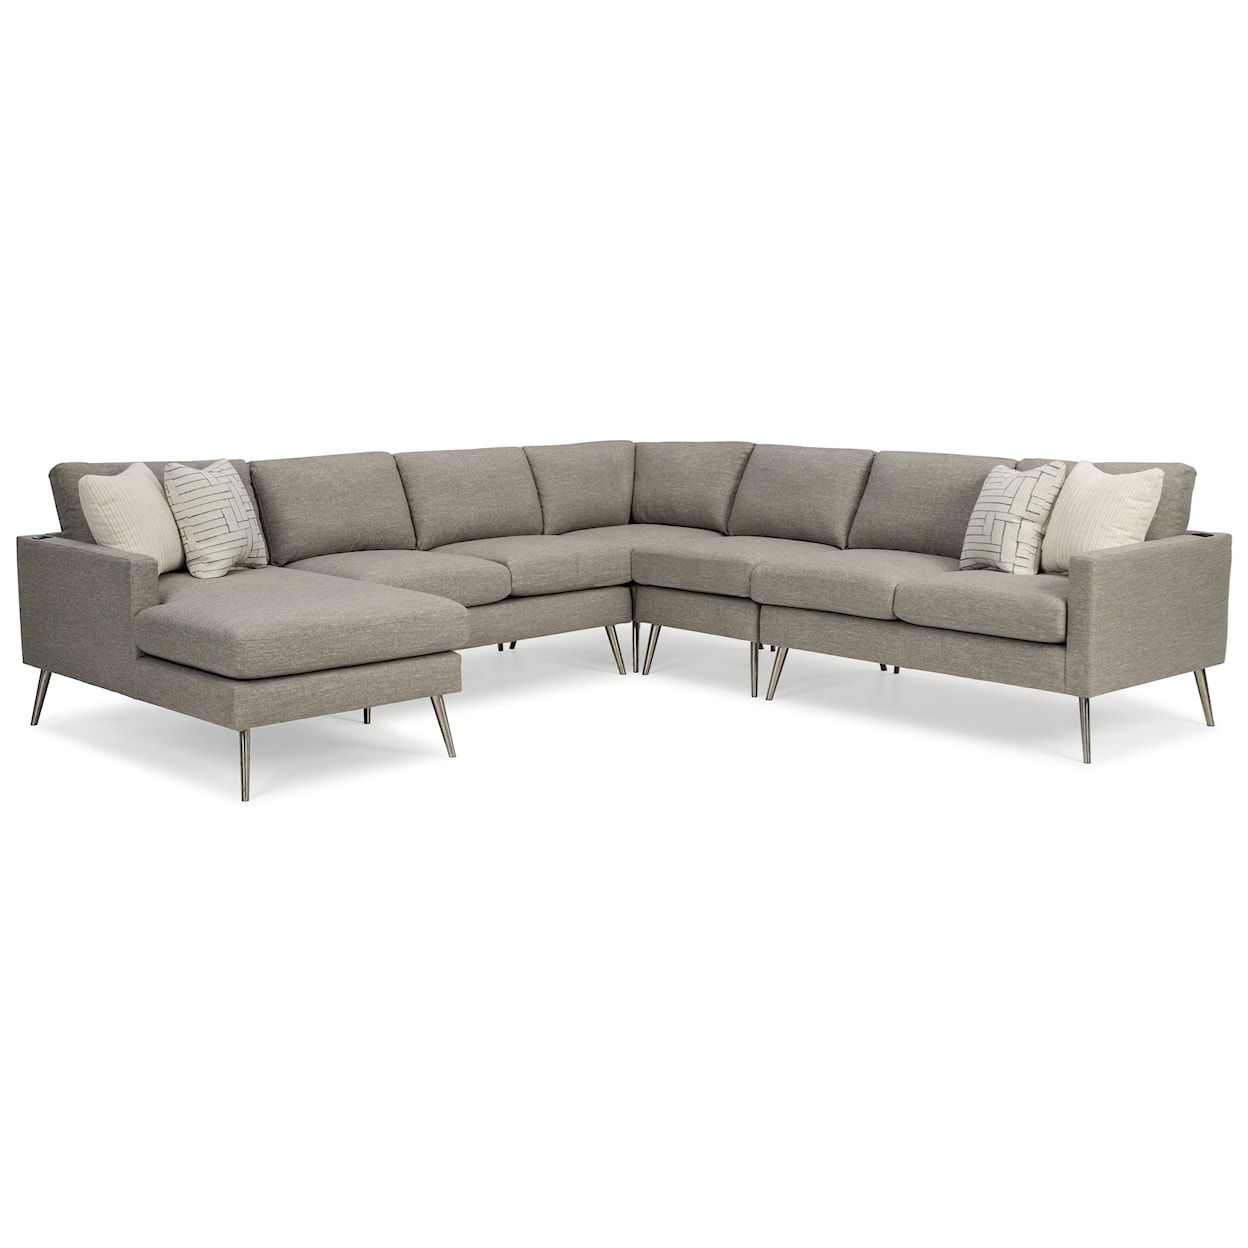 Bravo Furniture Trafton 6-Seat Sectional Sofa w/ LAF Chaise